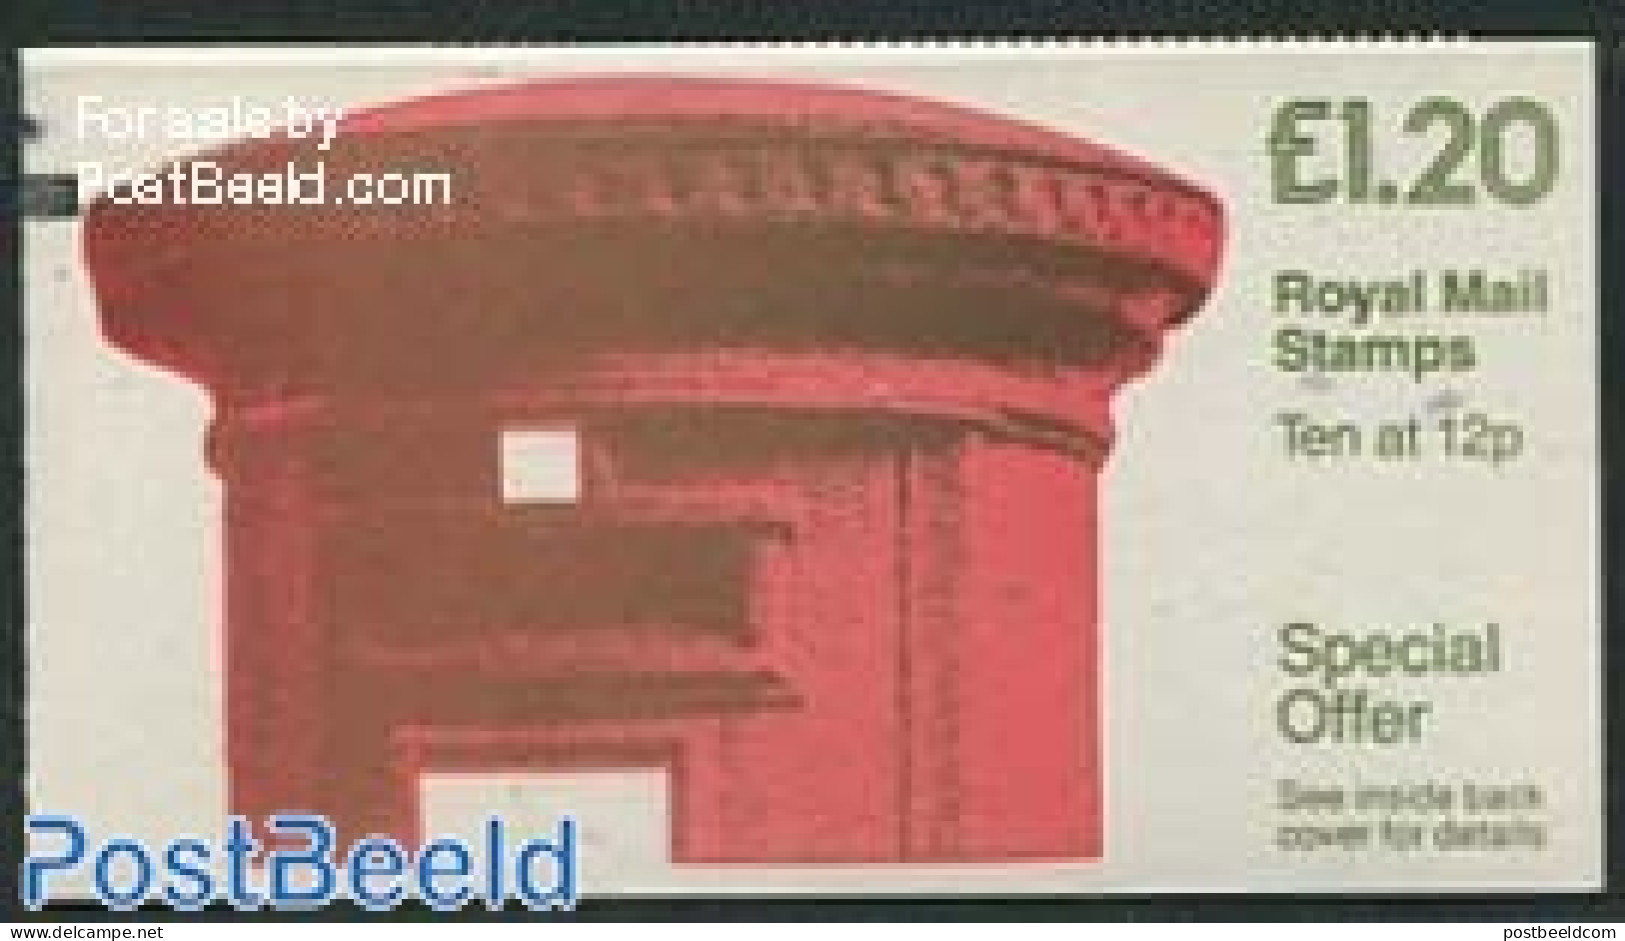 Great Britain 1986 Def. Booklet, Pillar Box, Selvedge At Left, Mint NH, Stamp Booklets - Ongebruikt